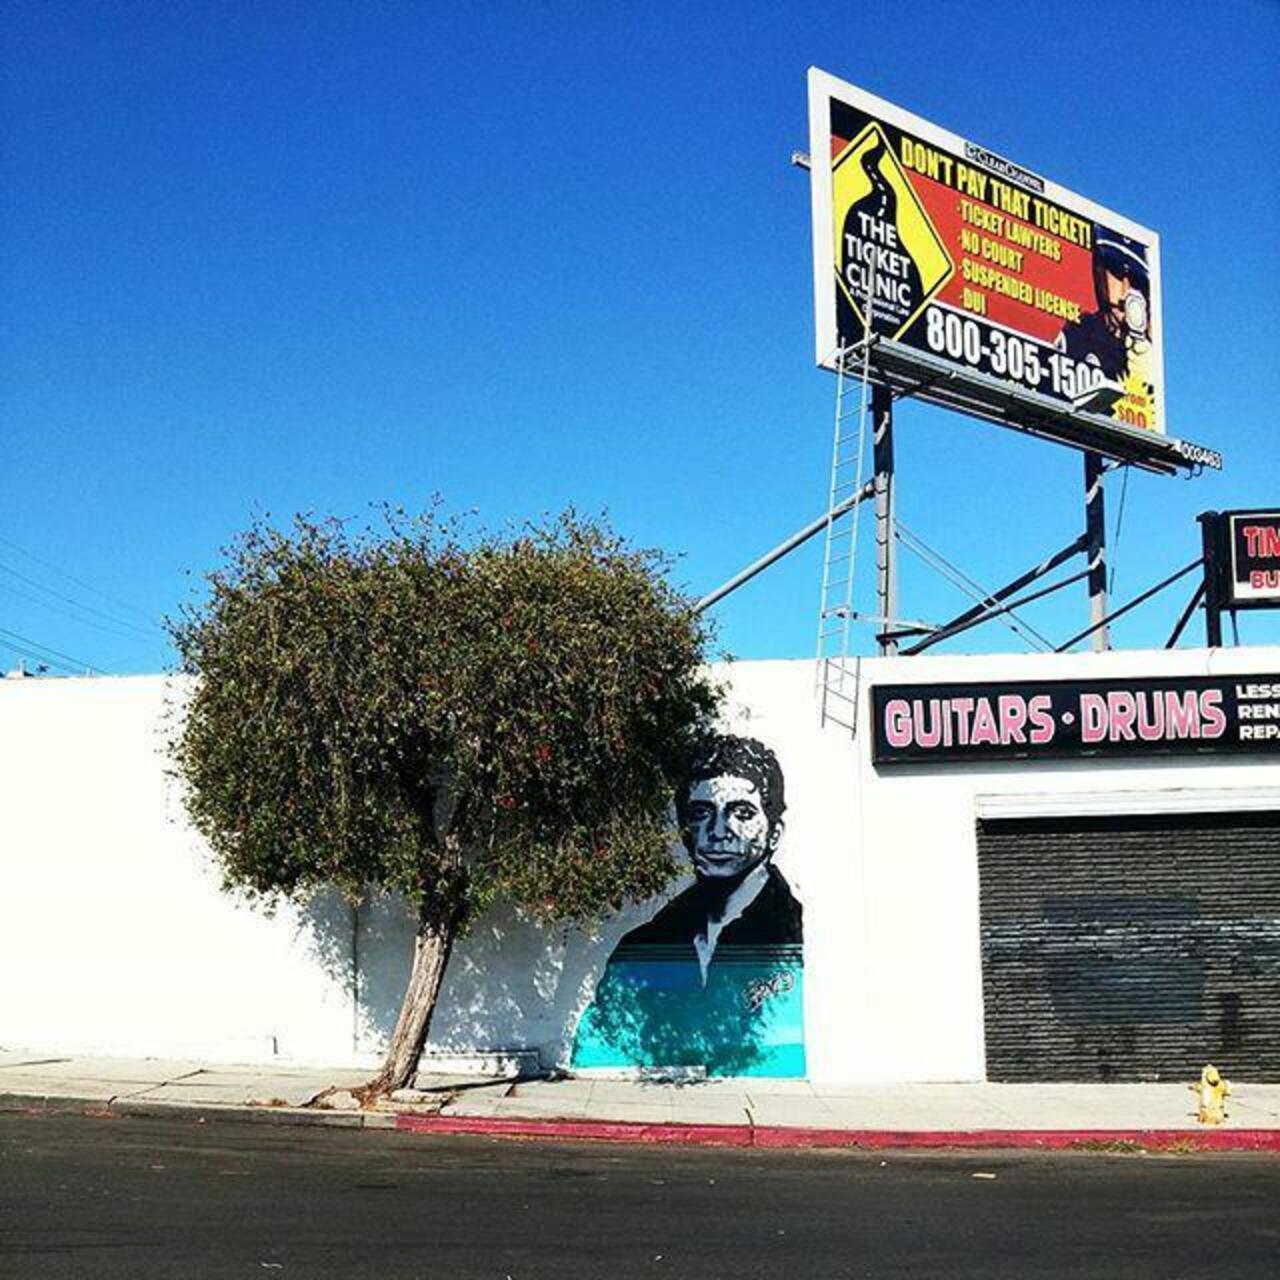 RT @skgz: Way of life... #losangeles #LA #cali #california #sign #graffiti #mural #tree #bluesky #police #music #store #stree… http://t.co/Tmw3VnFA0G